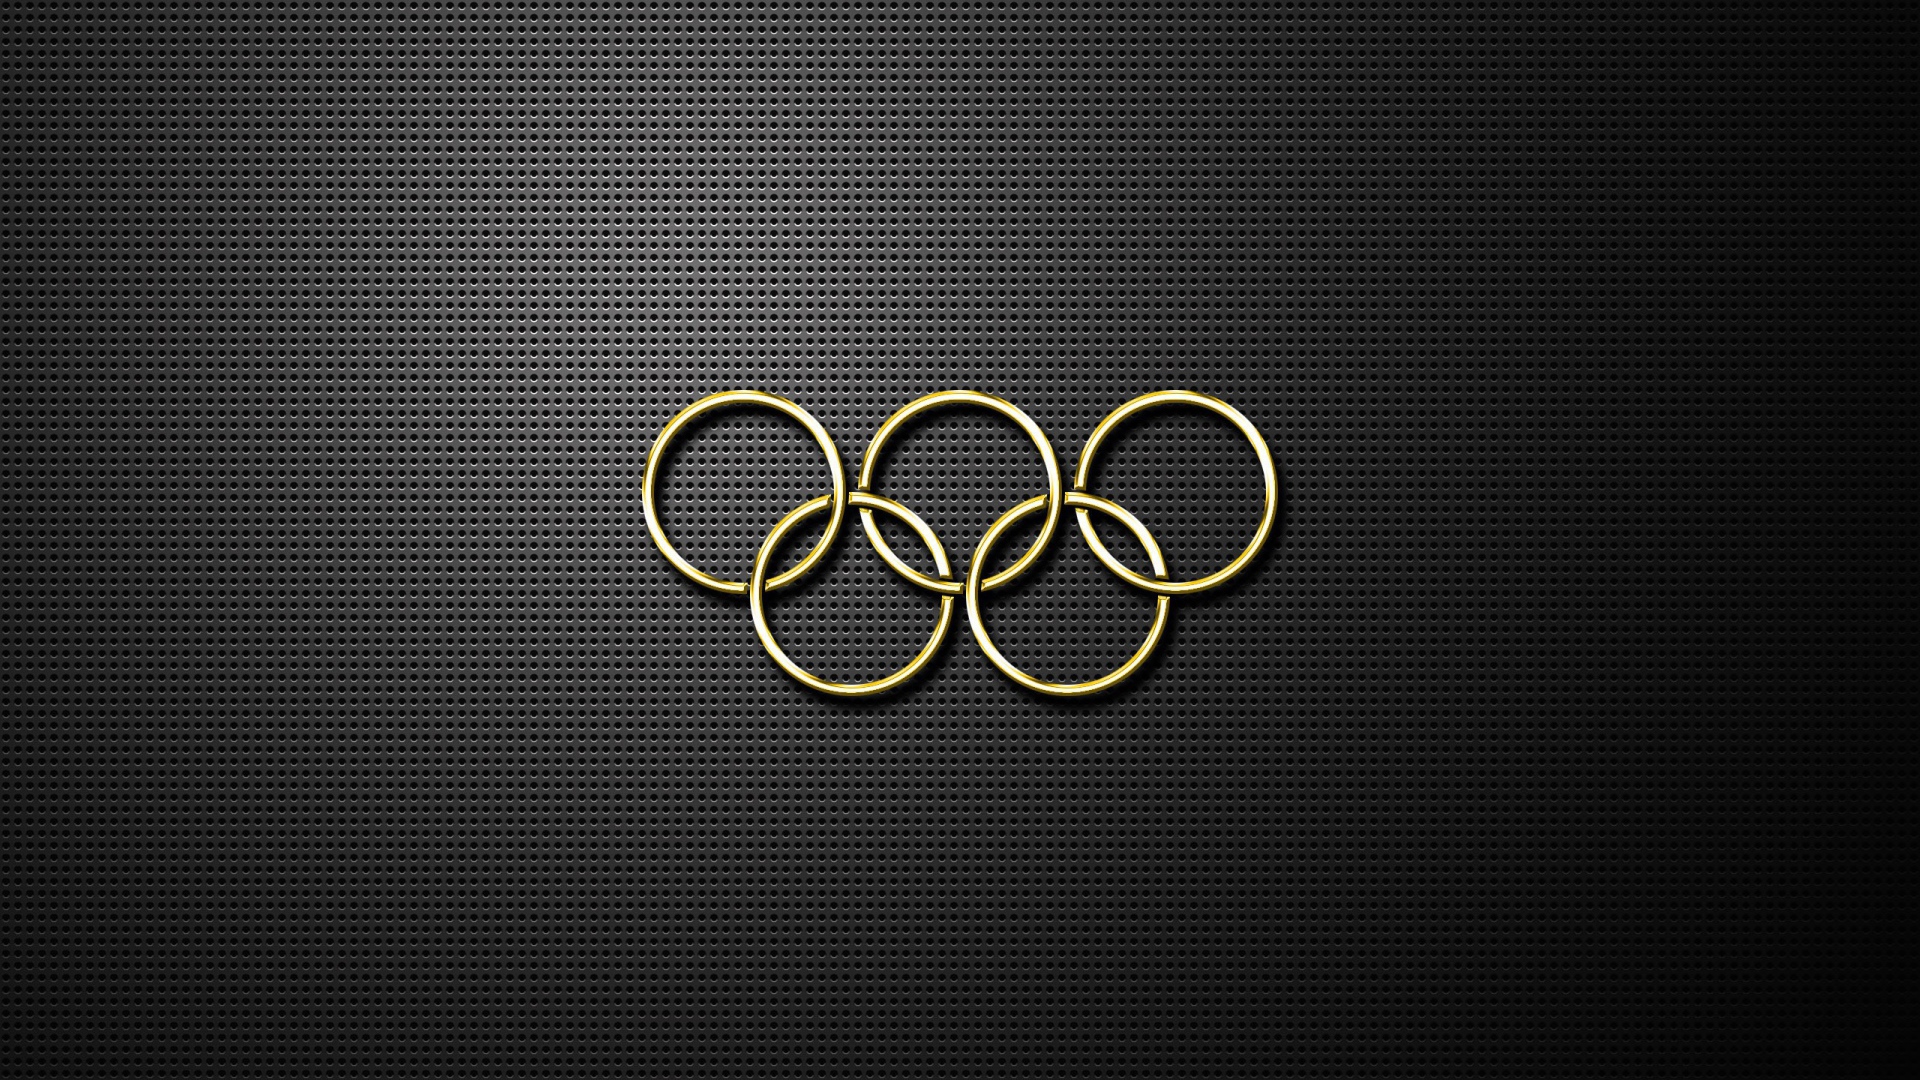 Логотип Олимпиады